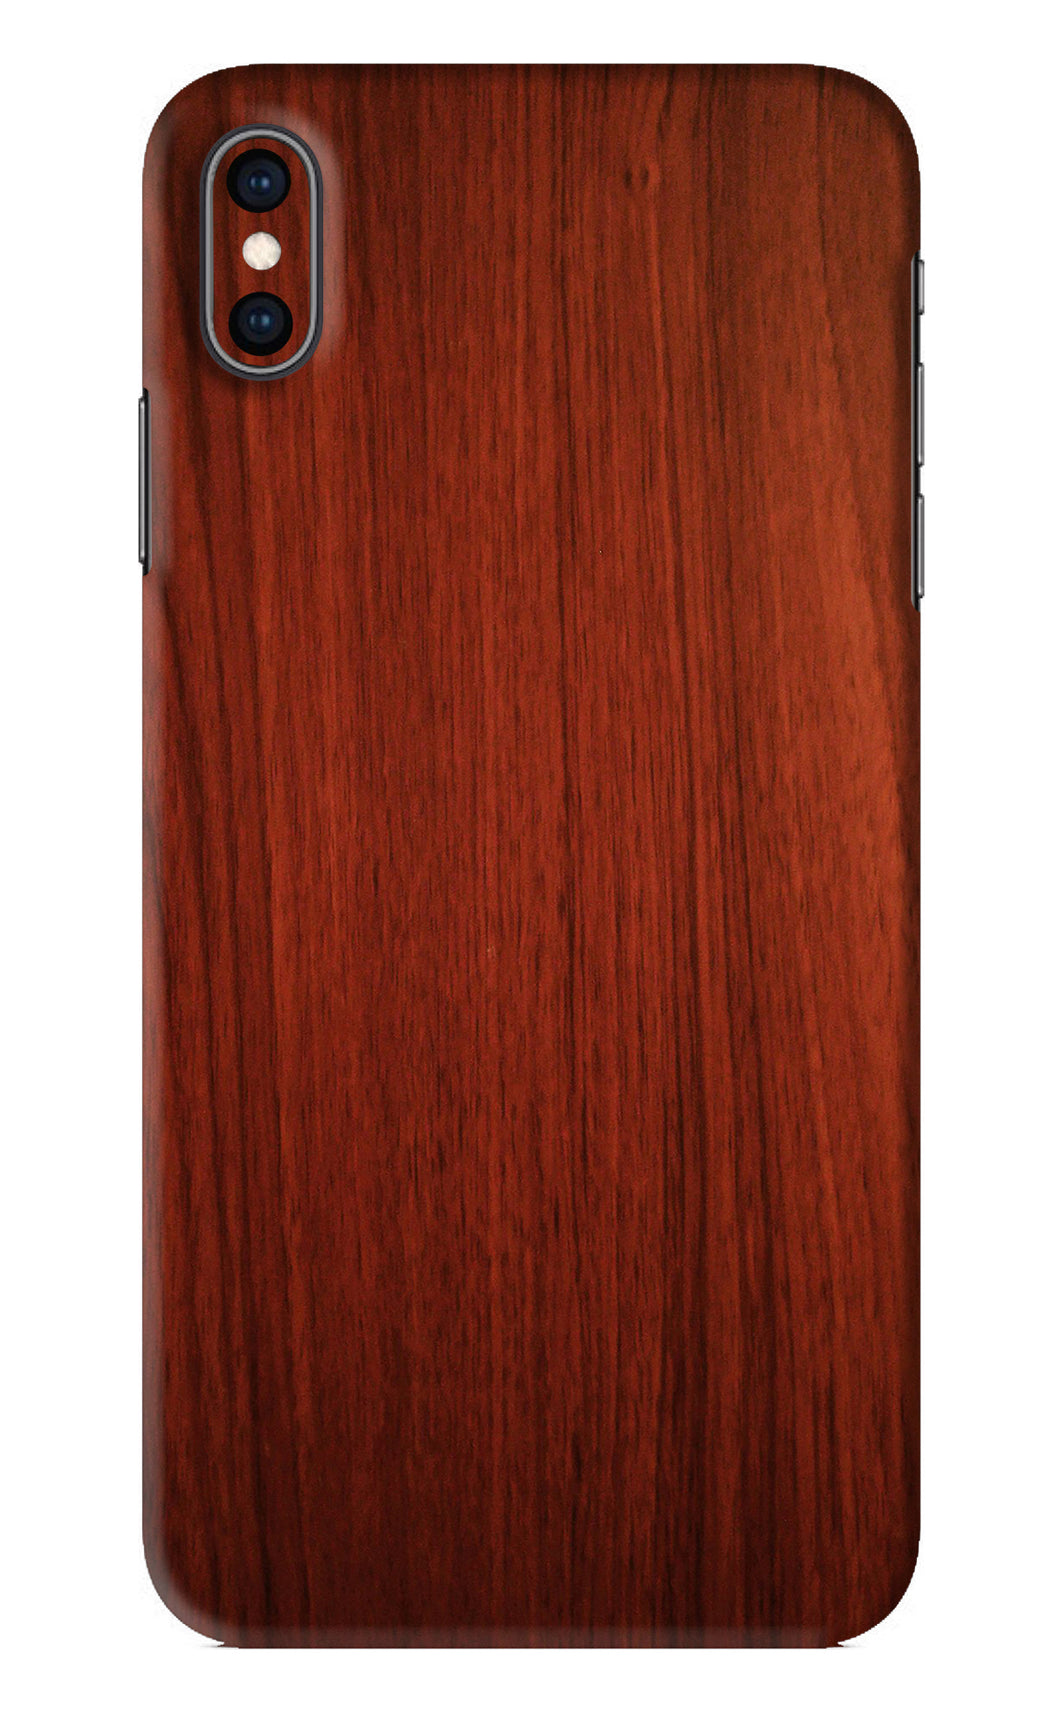 Wooden Plain Pattern iPhone XS Max Back Skin Wrap